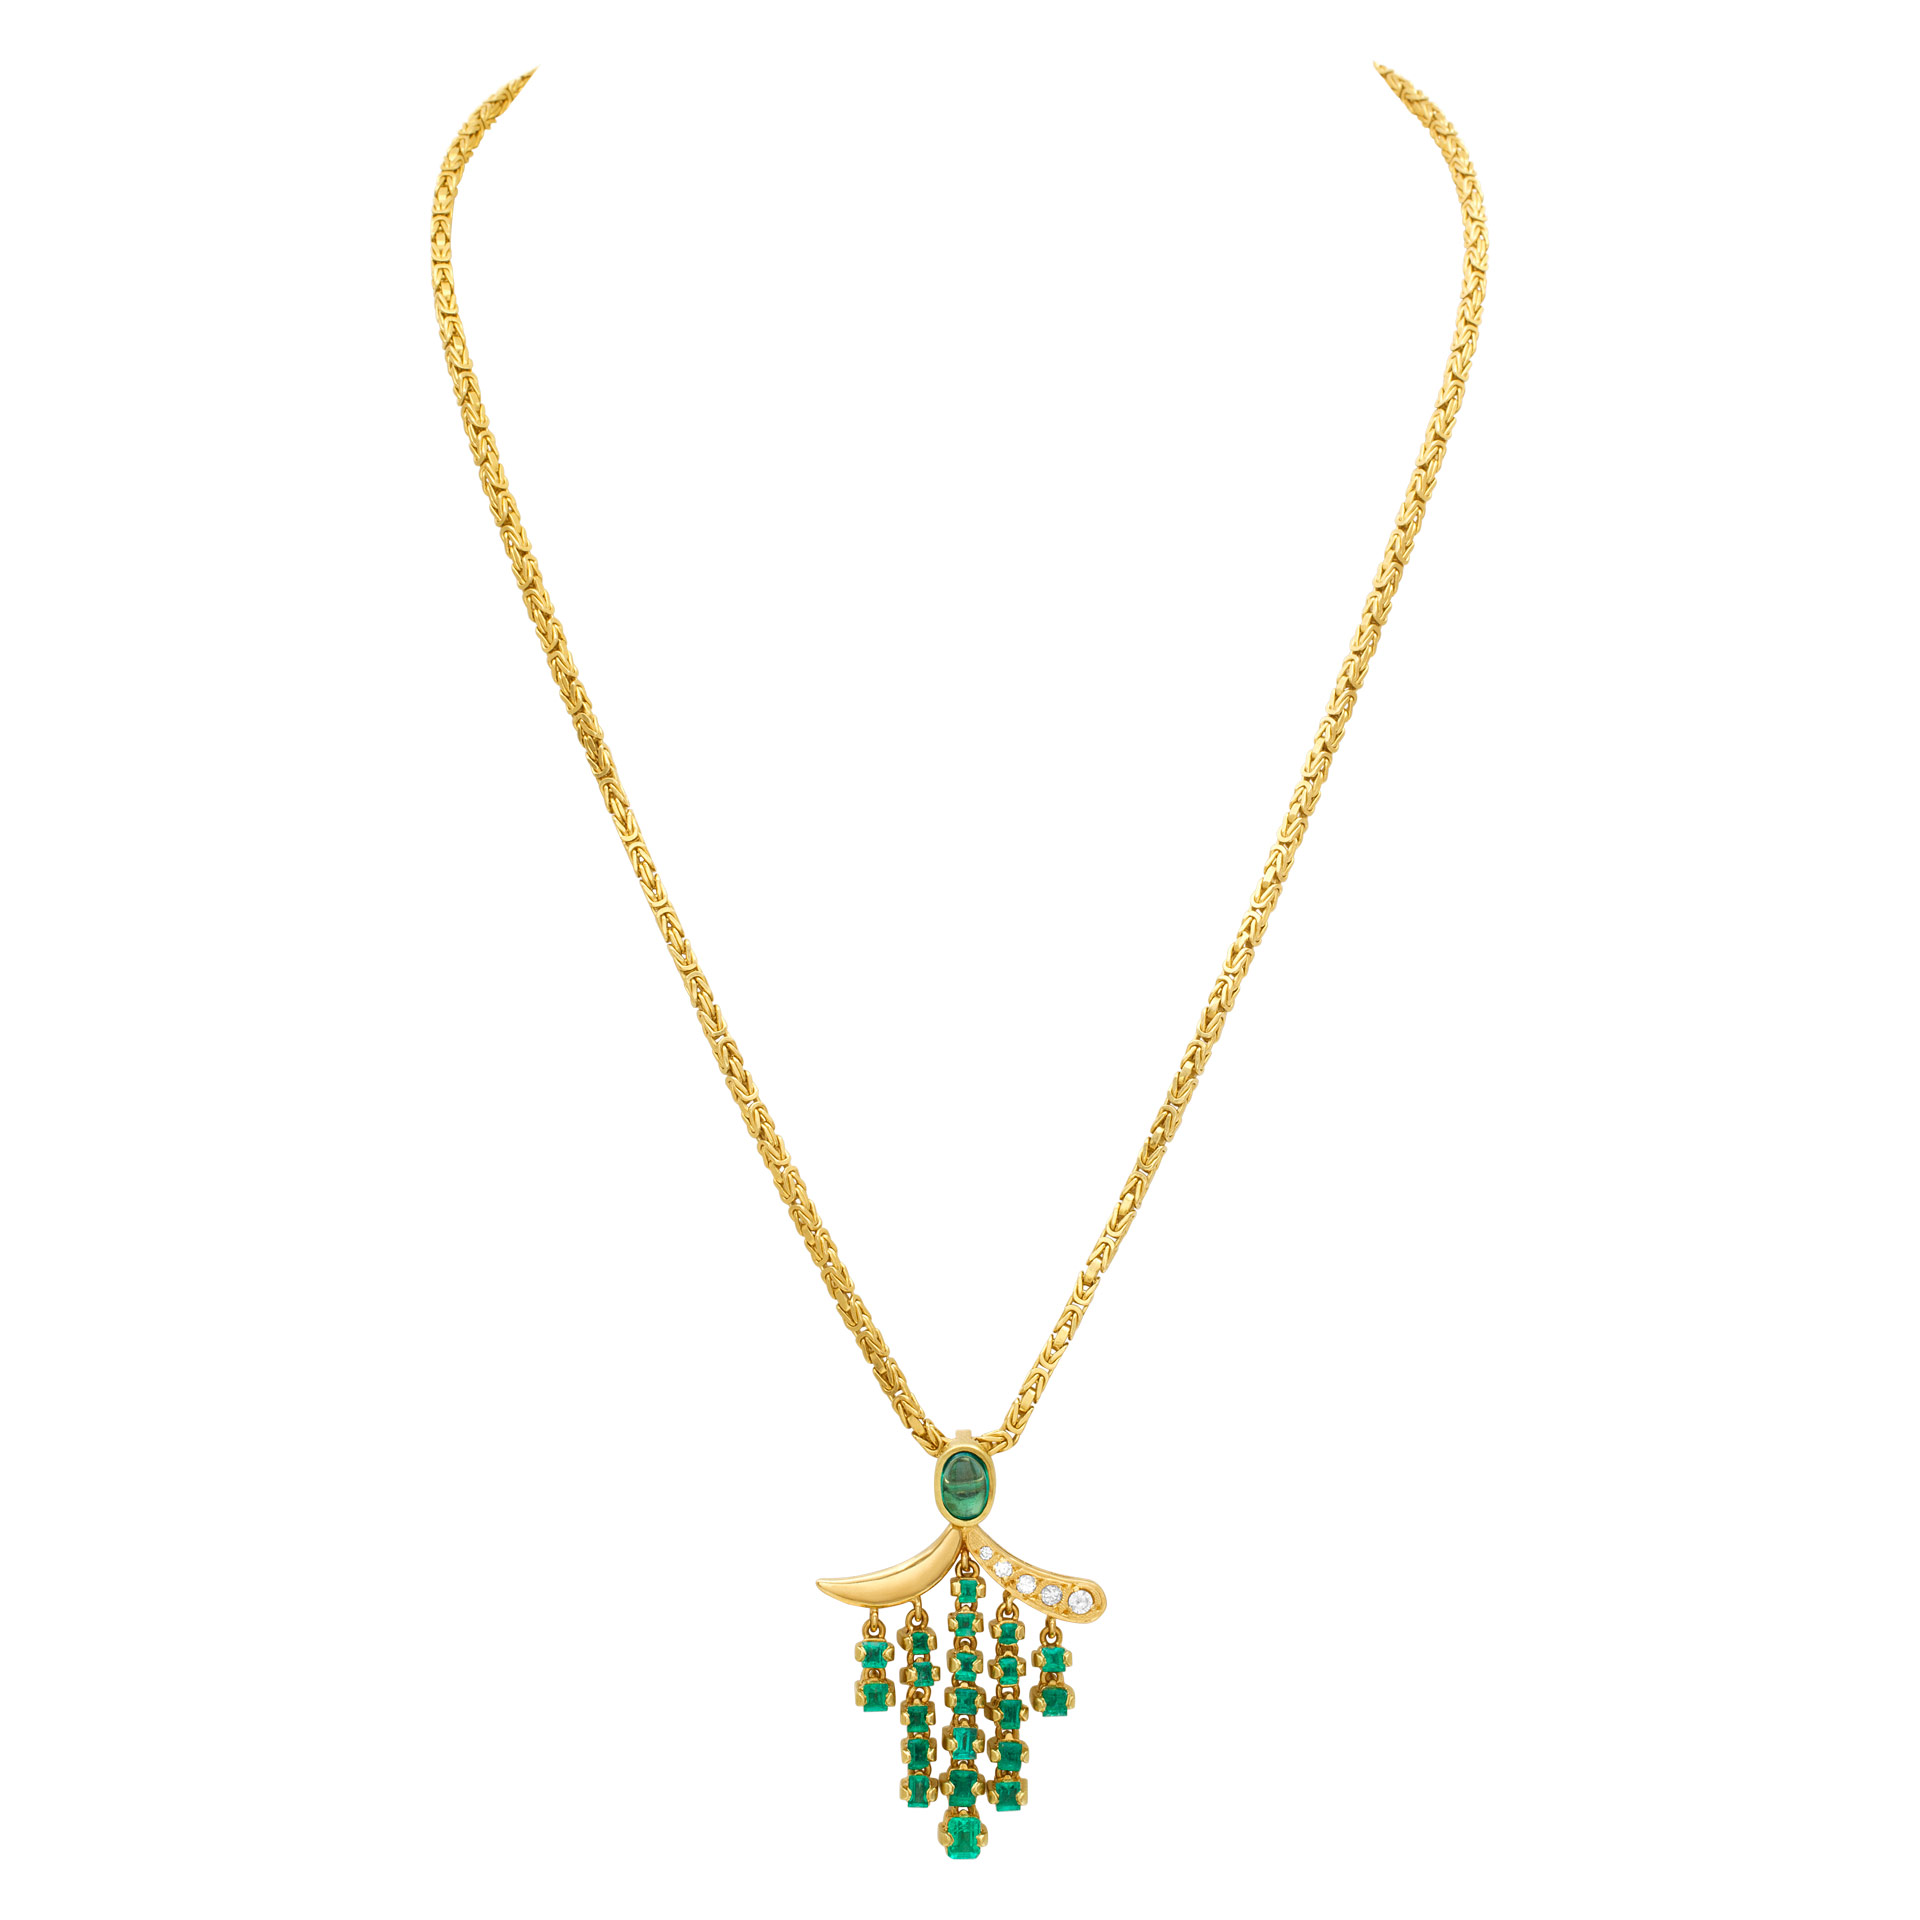 Gorgeous Italian Designer "Balestra", emerald and diamond pendant on an 18k chain.